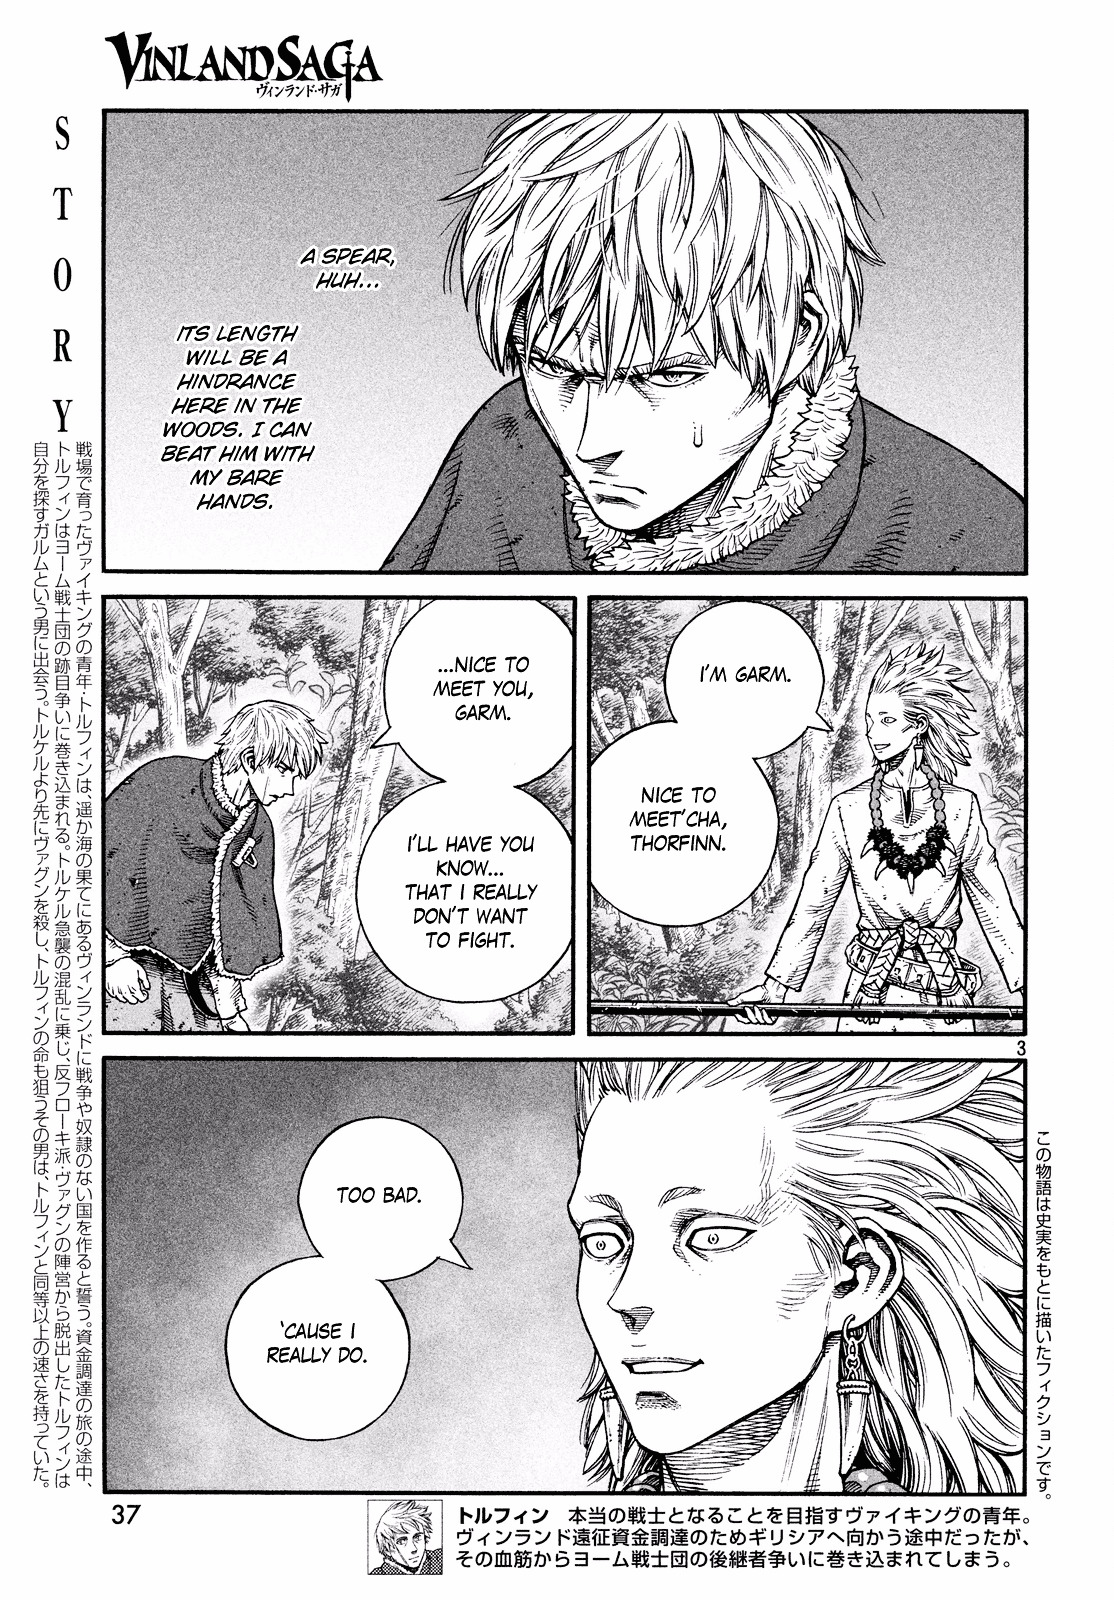 Vinland Saga Manga Manga Chapter - 135 - image 4